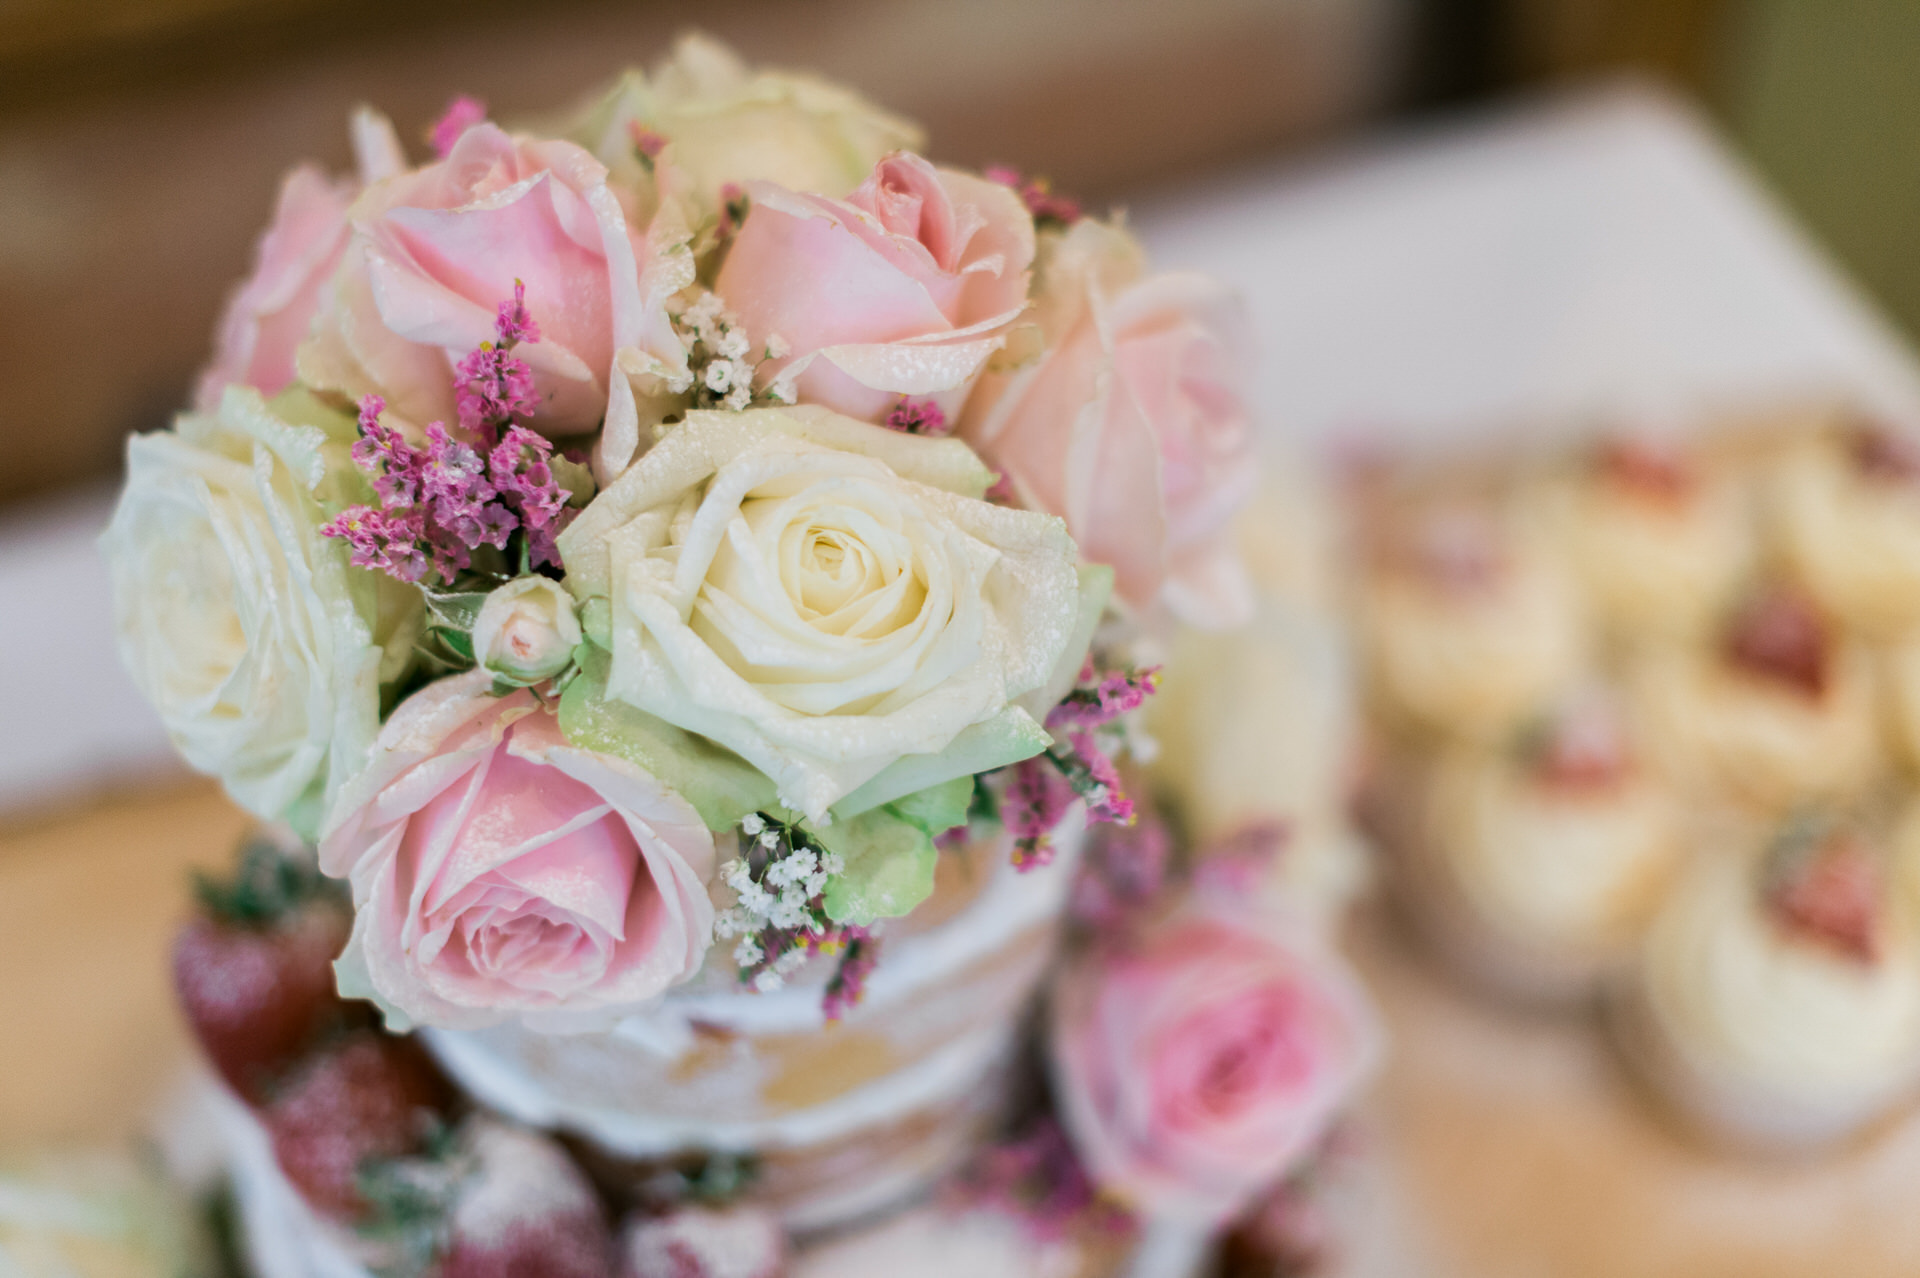 Charlton House wedding cake  